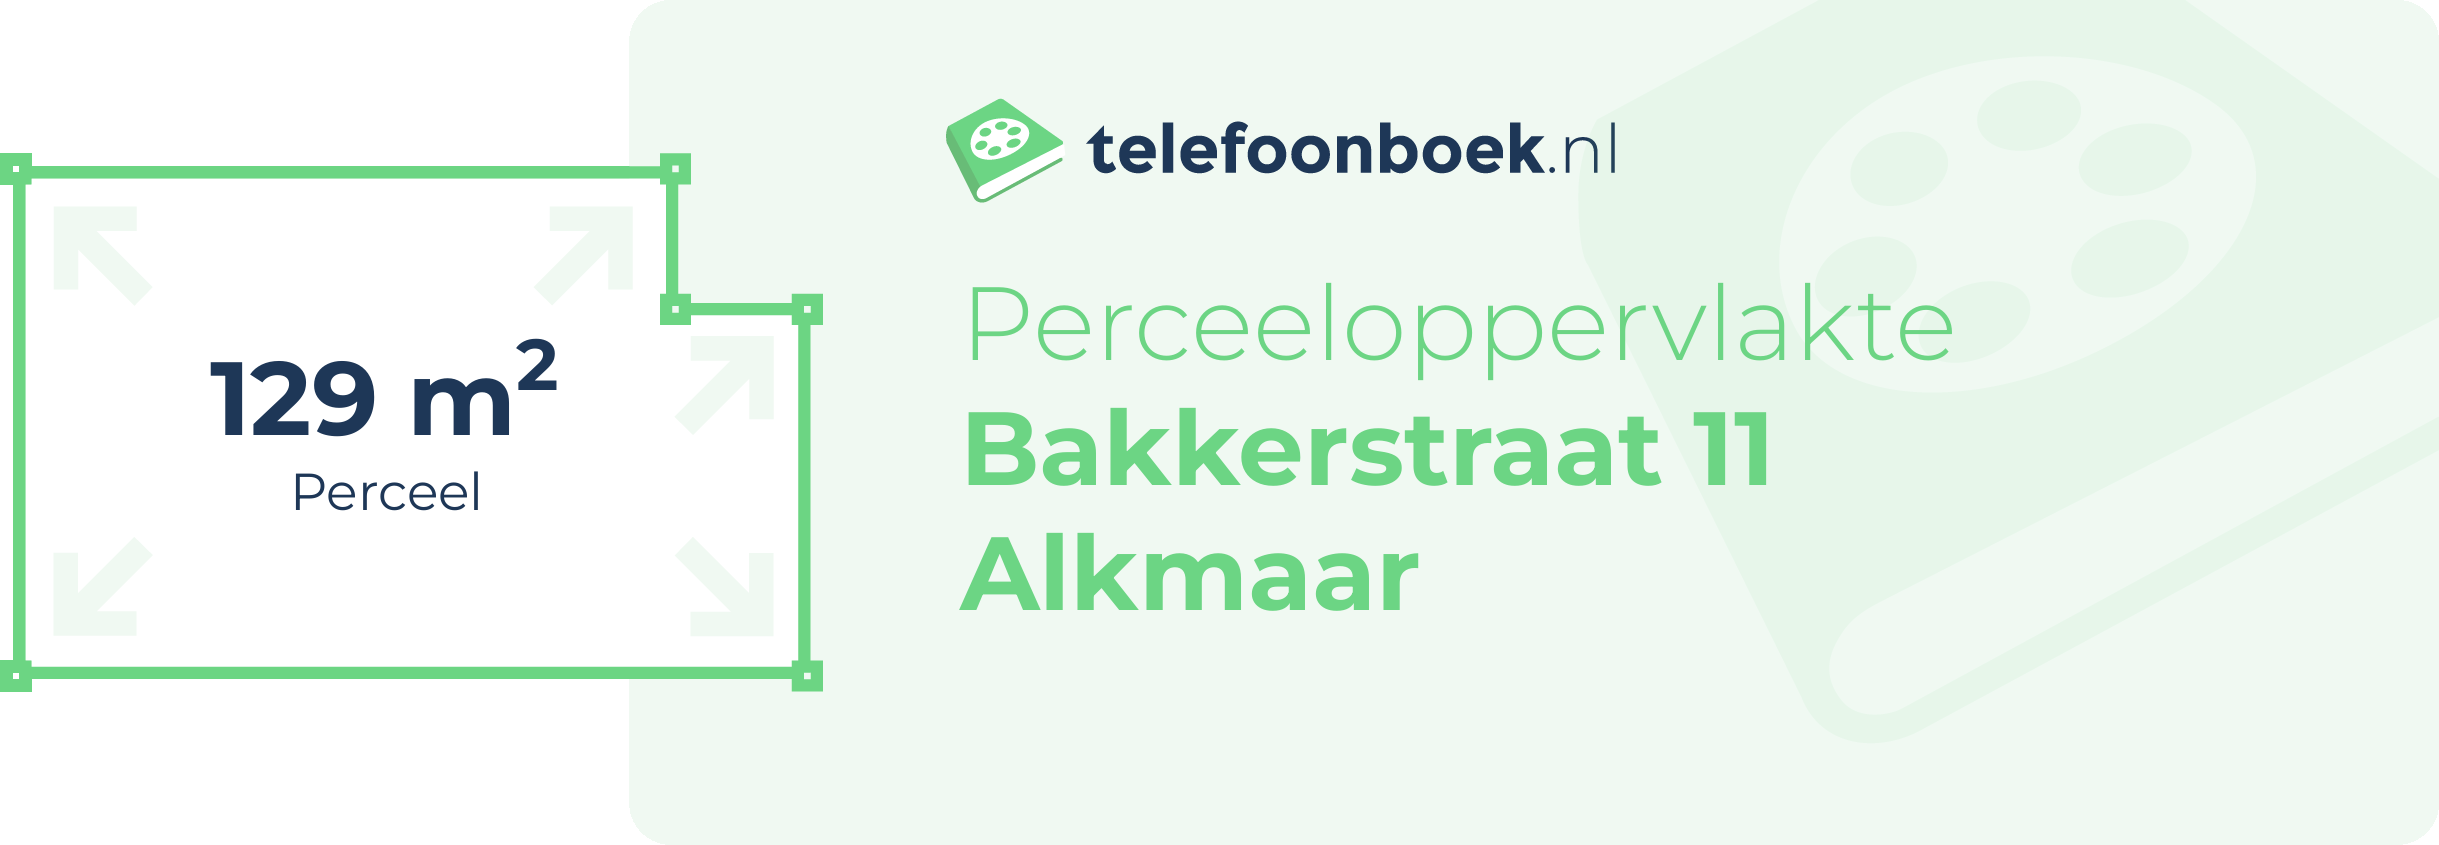 Perceeloppervlakte Bakkerstraat 11 Alkmaar